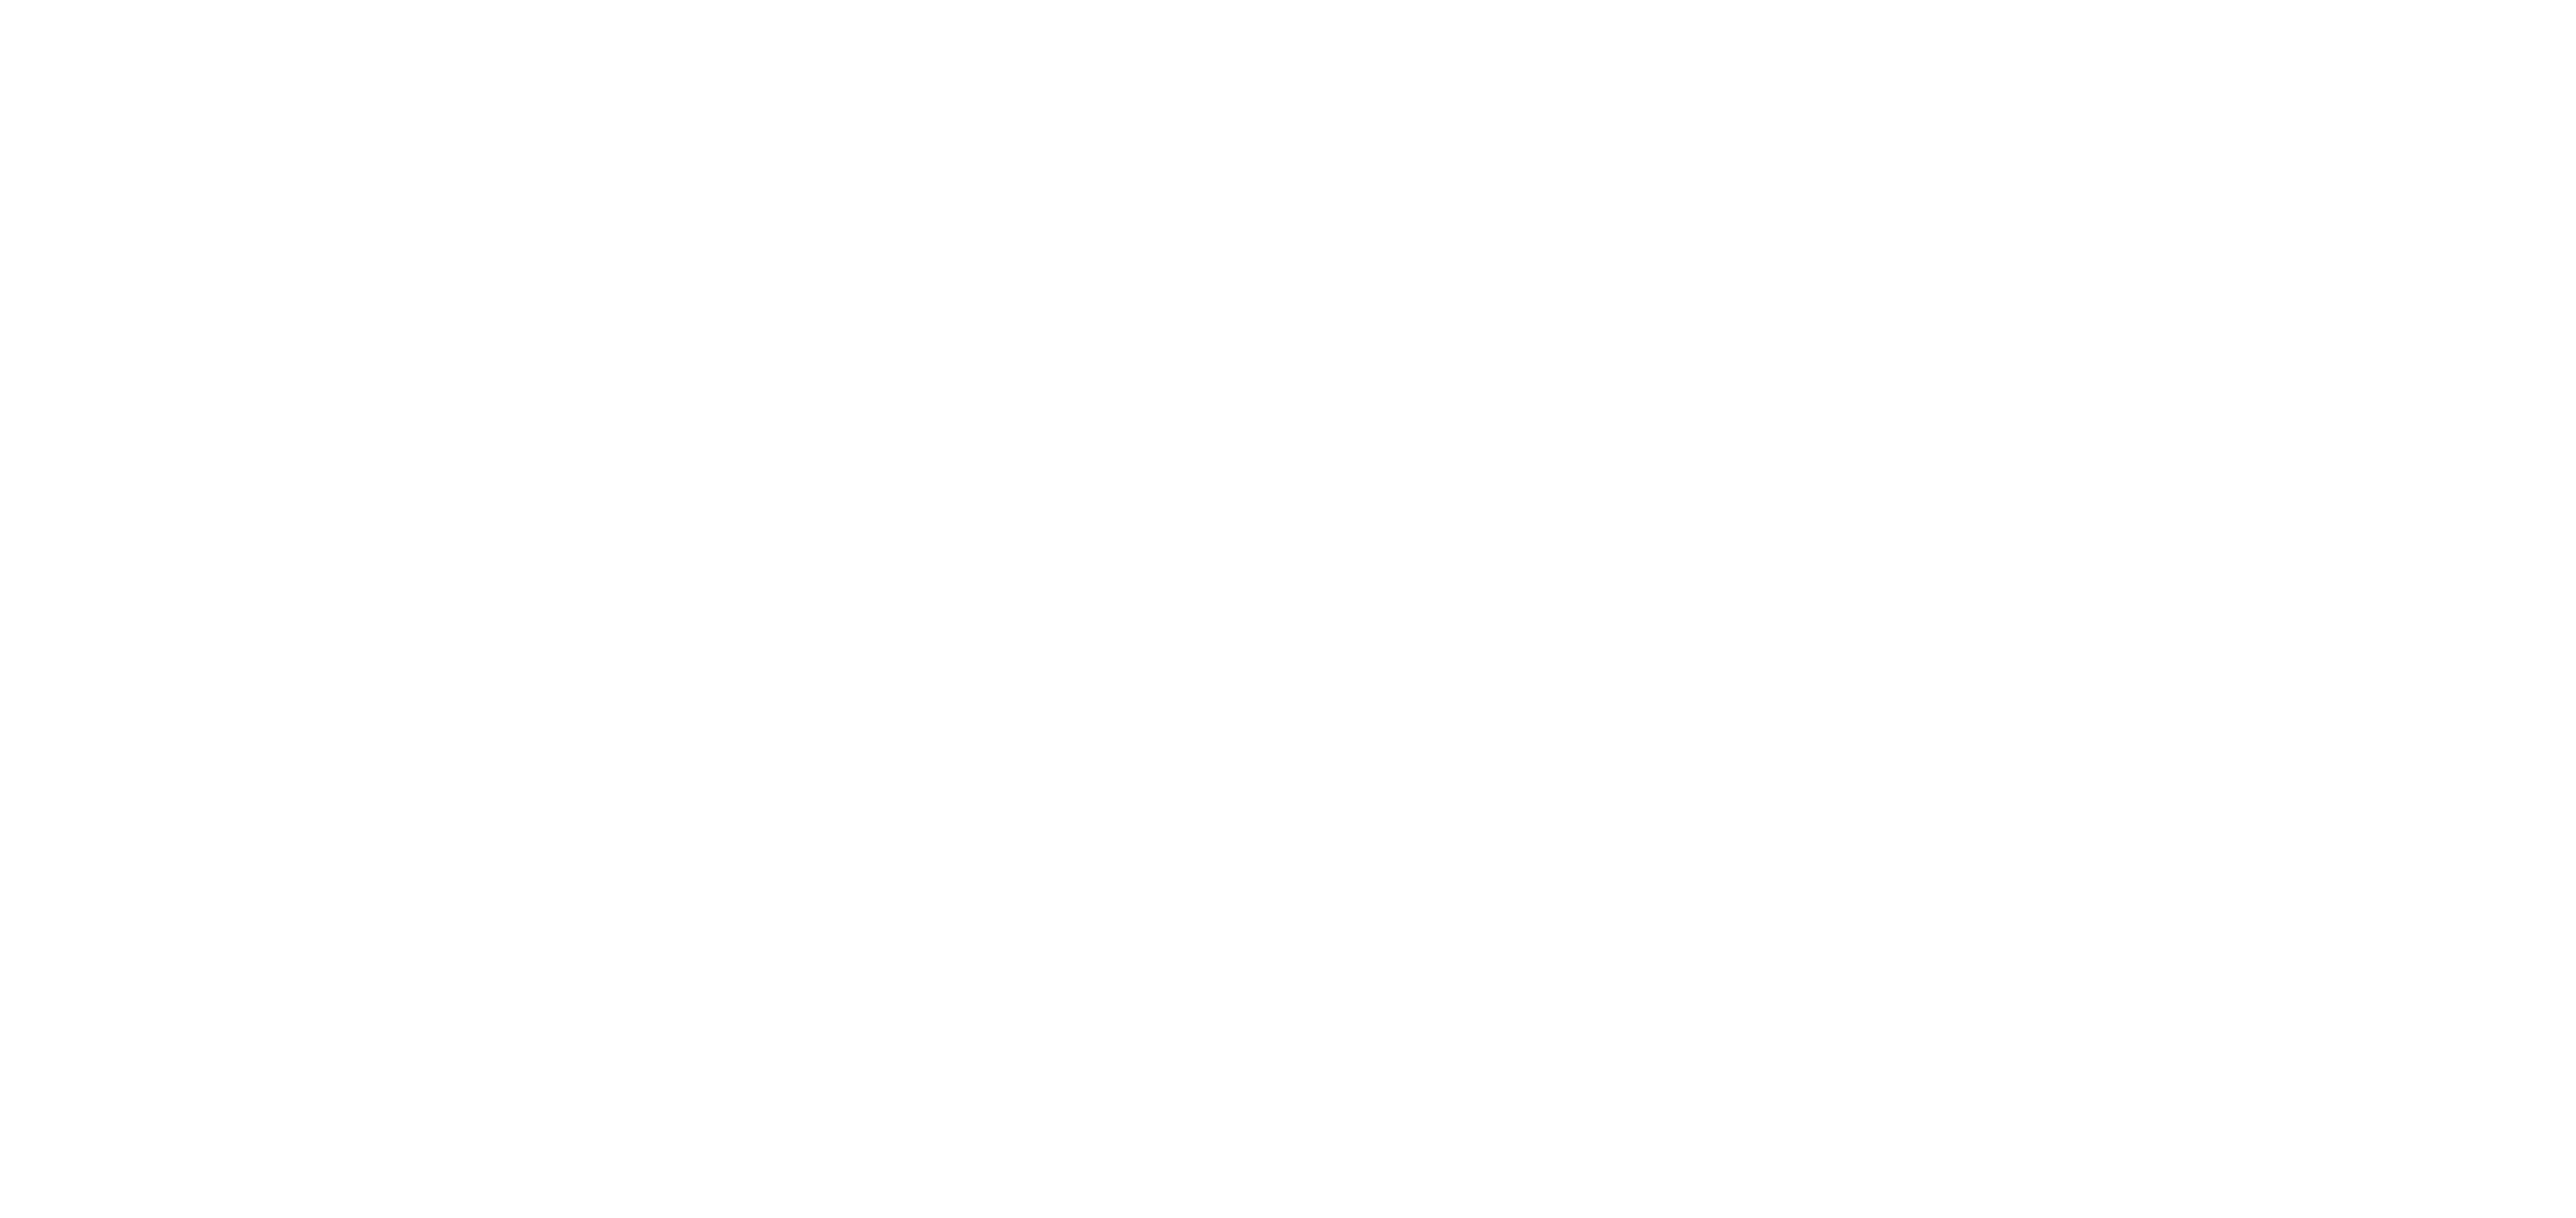 pace university travel abroad